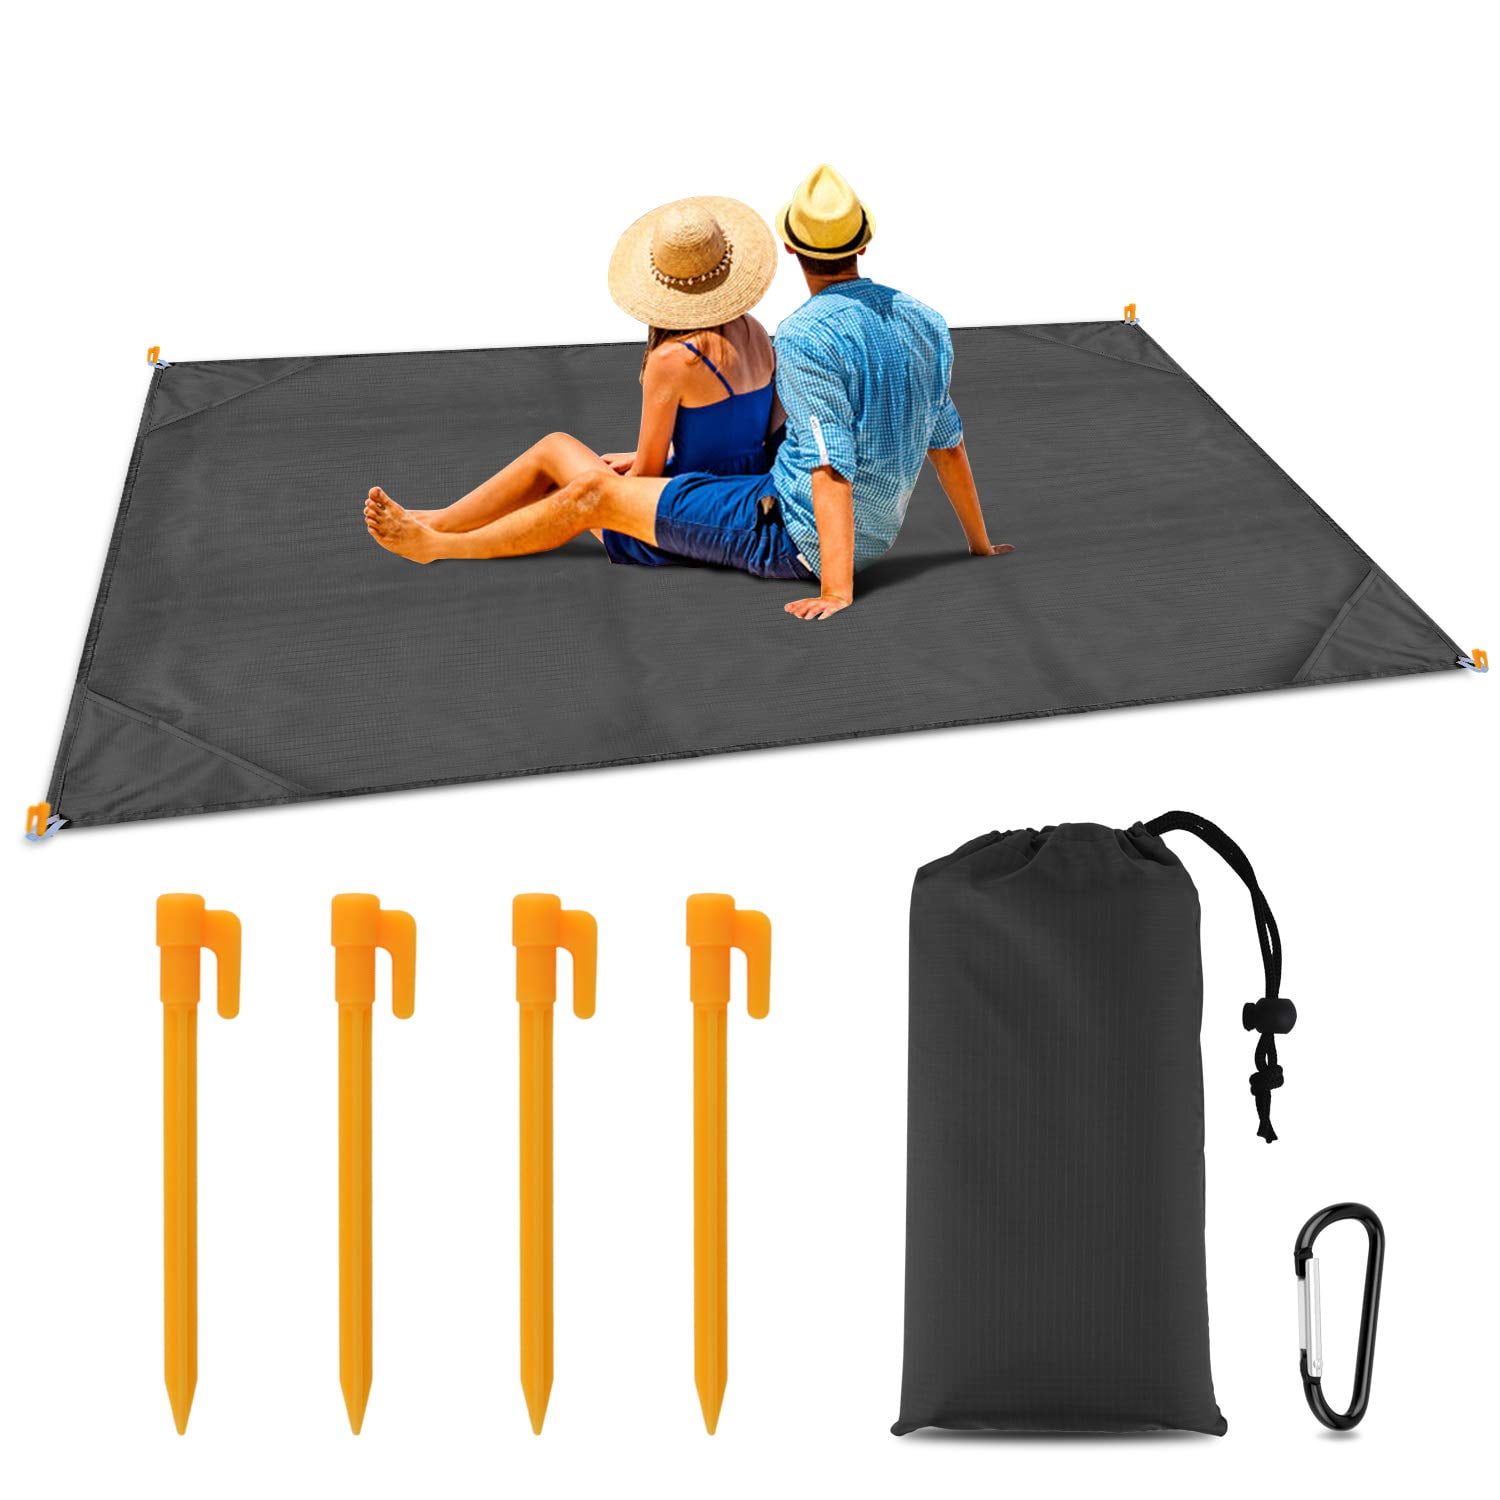 Takefuns Camping Mat Folding Beach Seat Picnic Mat Sleeping Pad Waterproof Outdoor Mattress